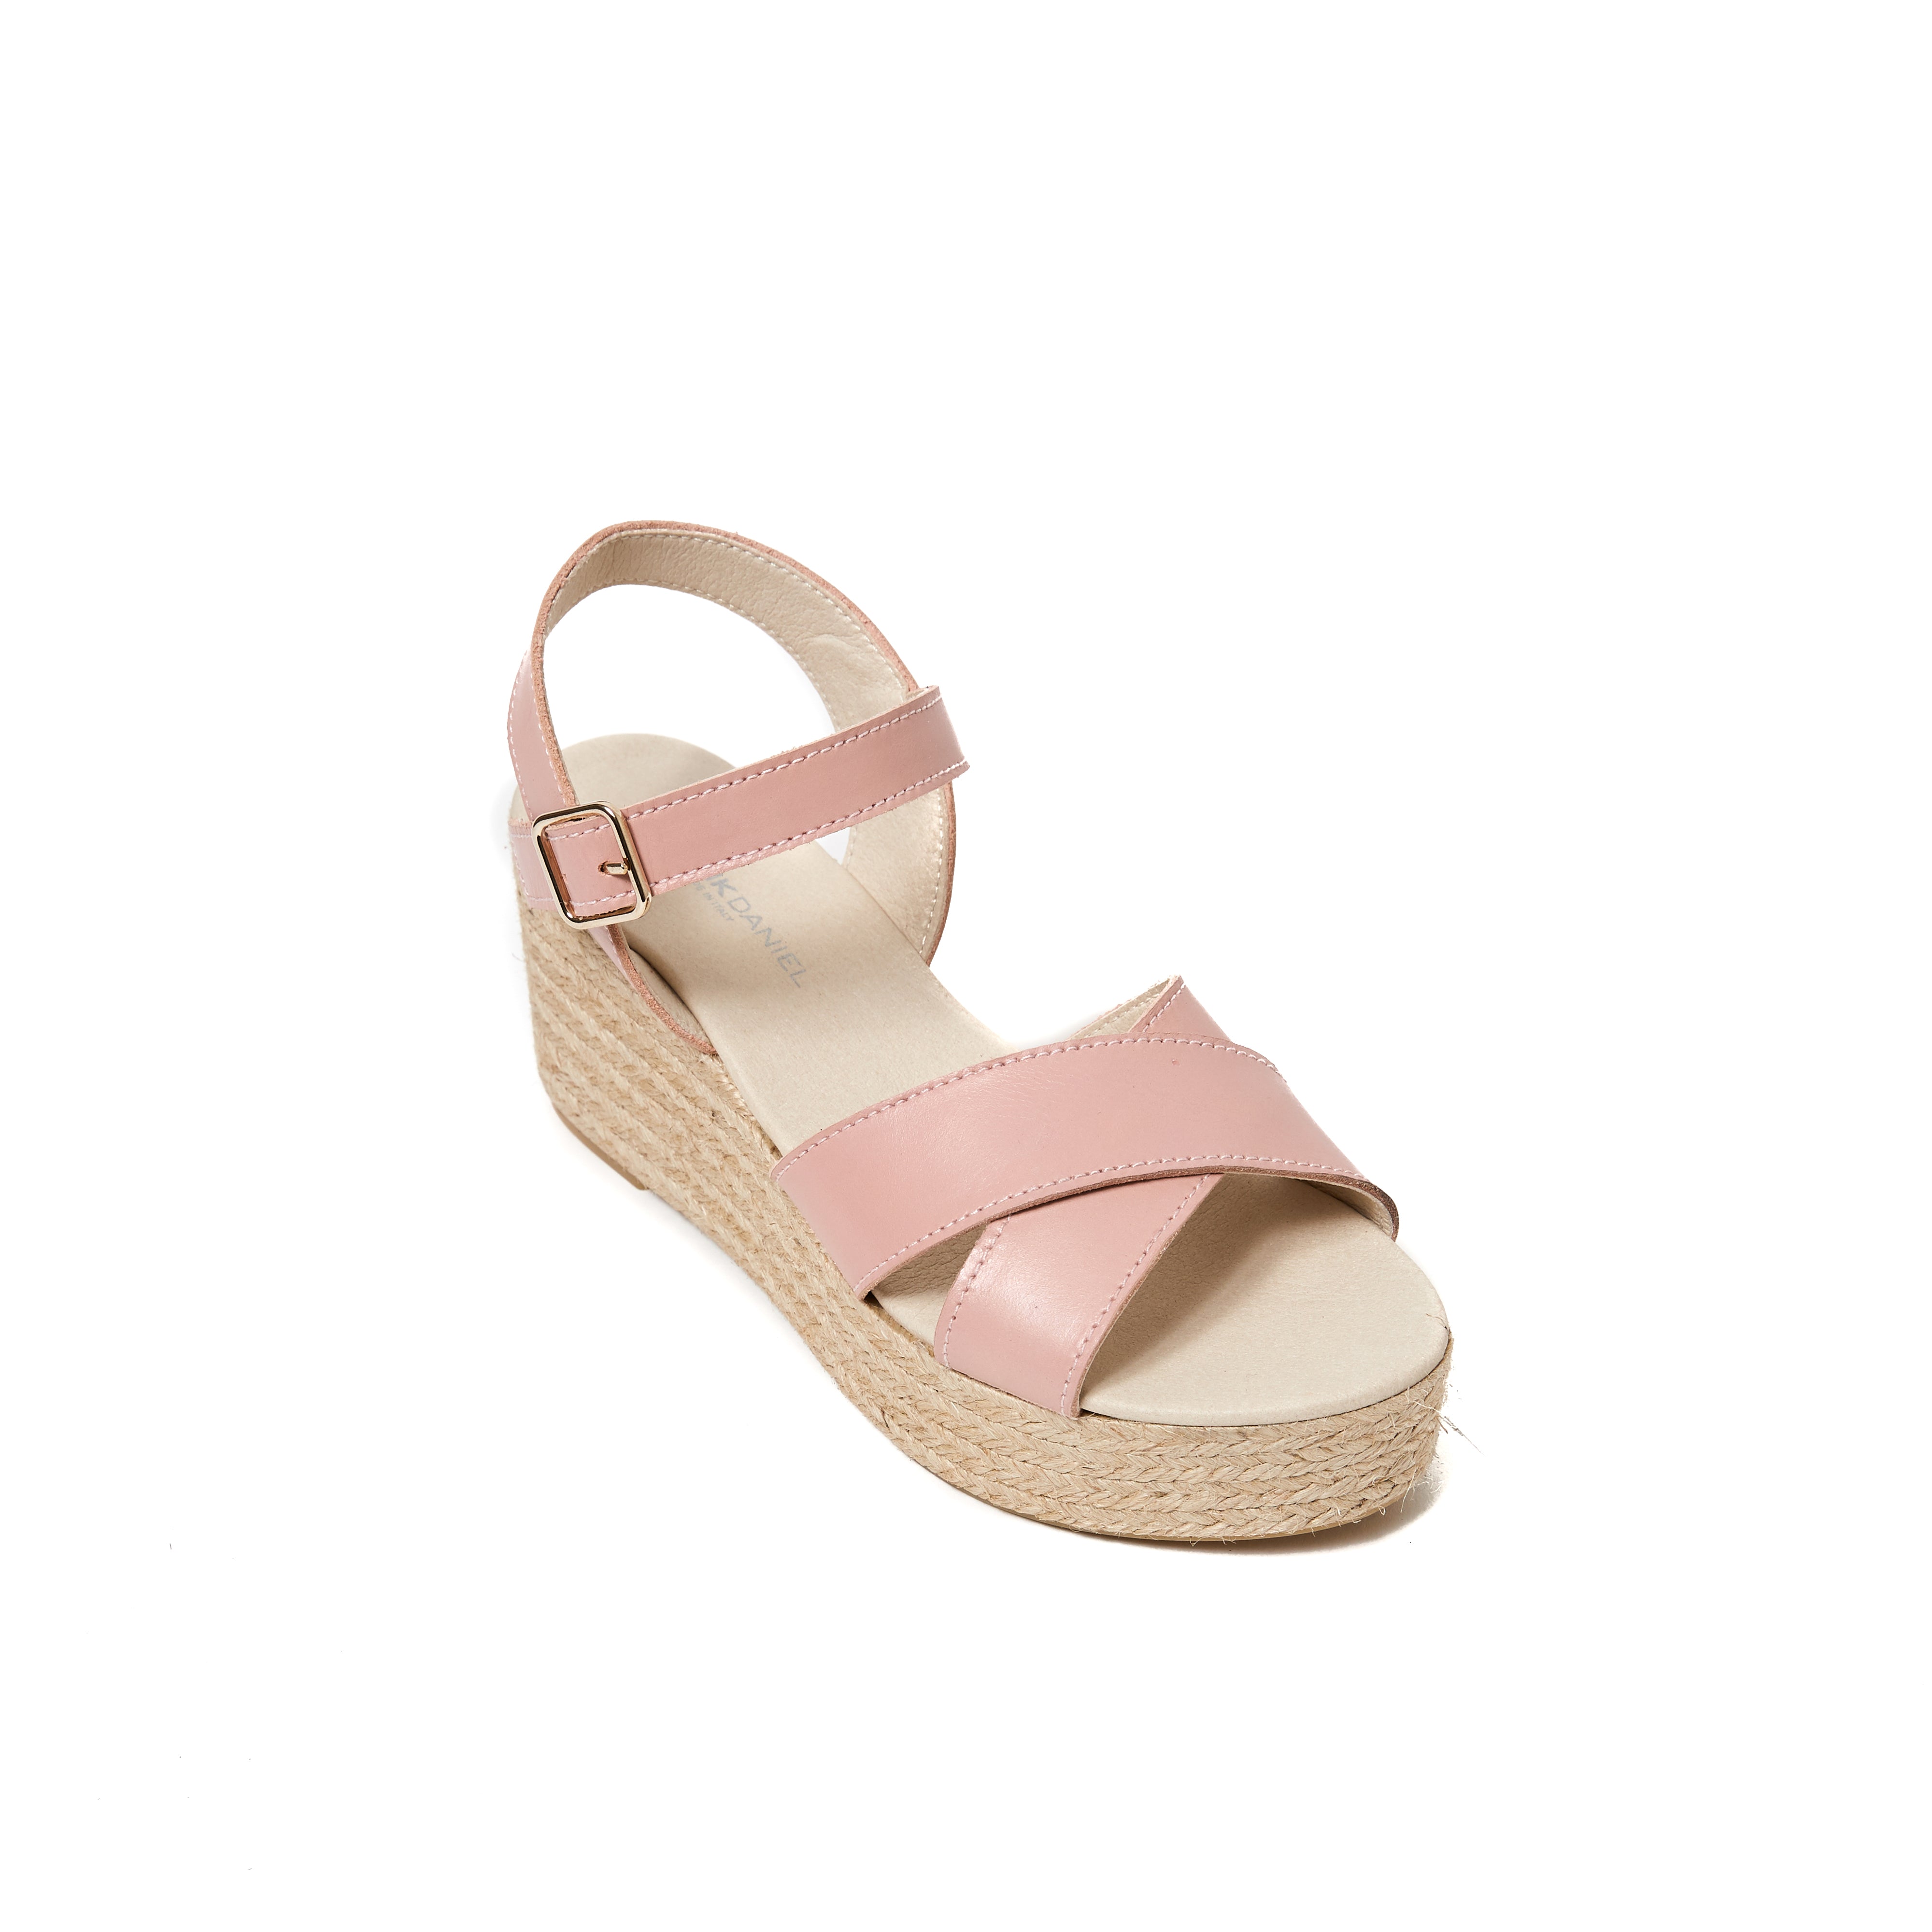 Sandal baby pink